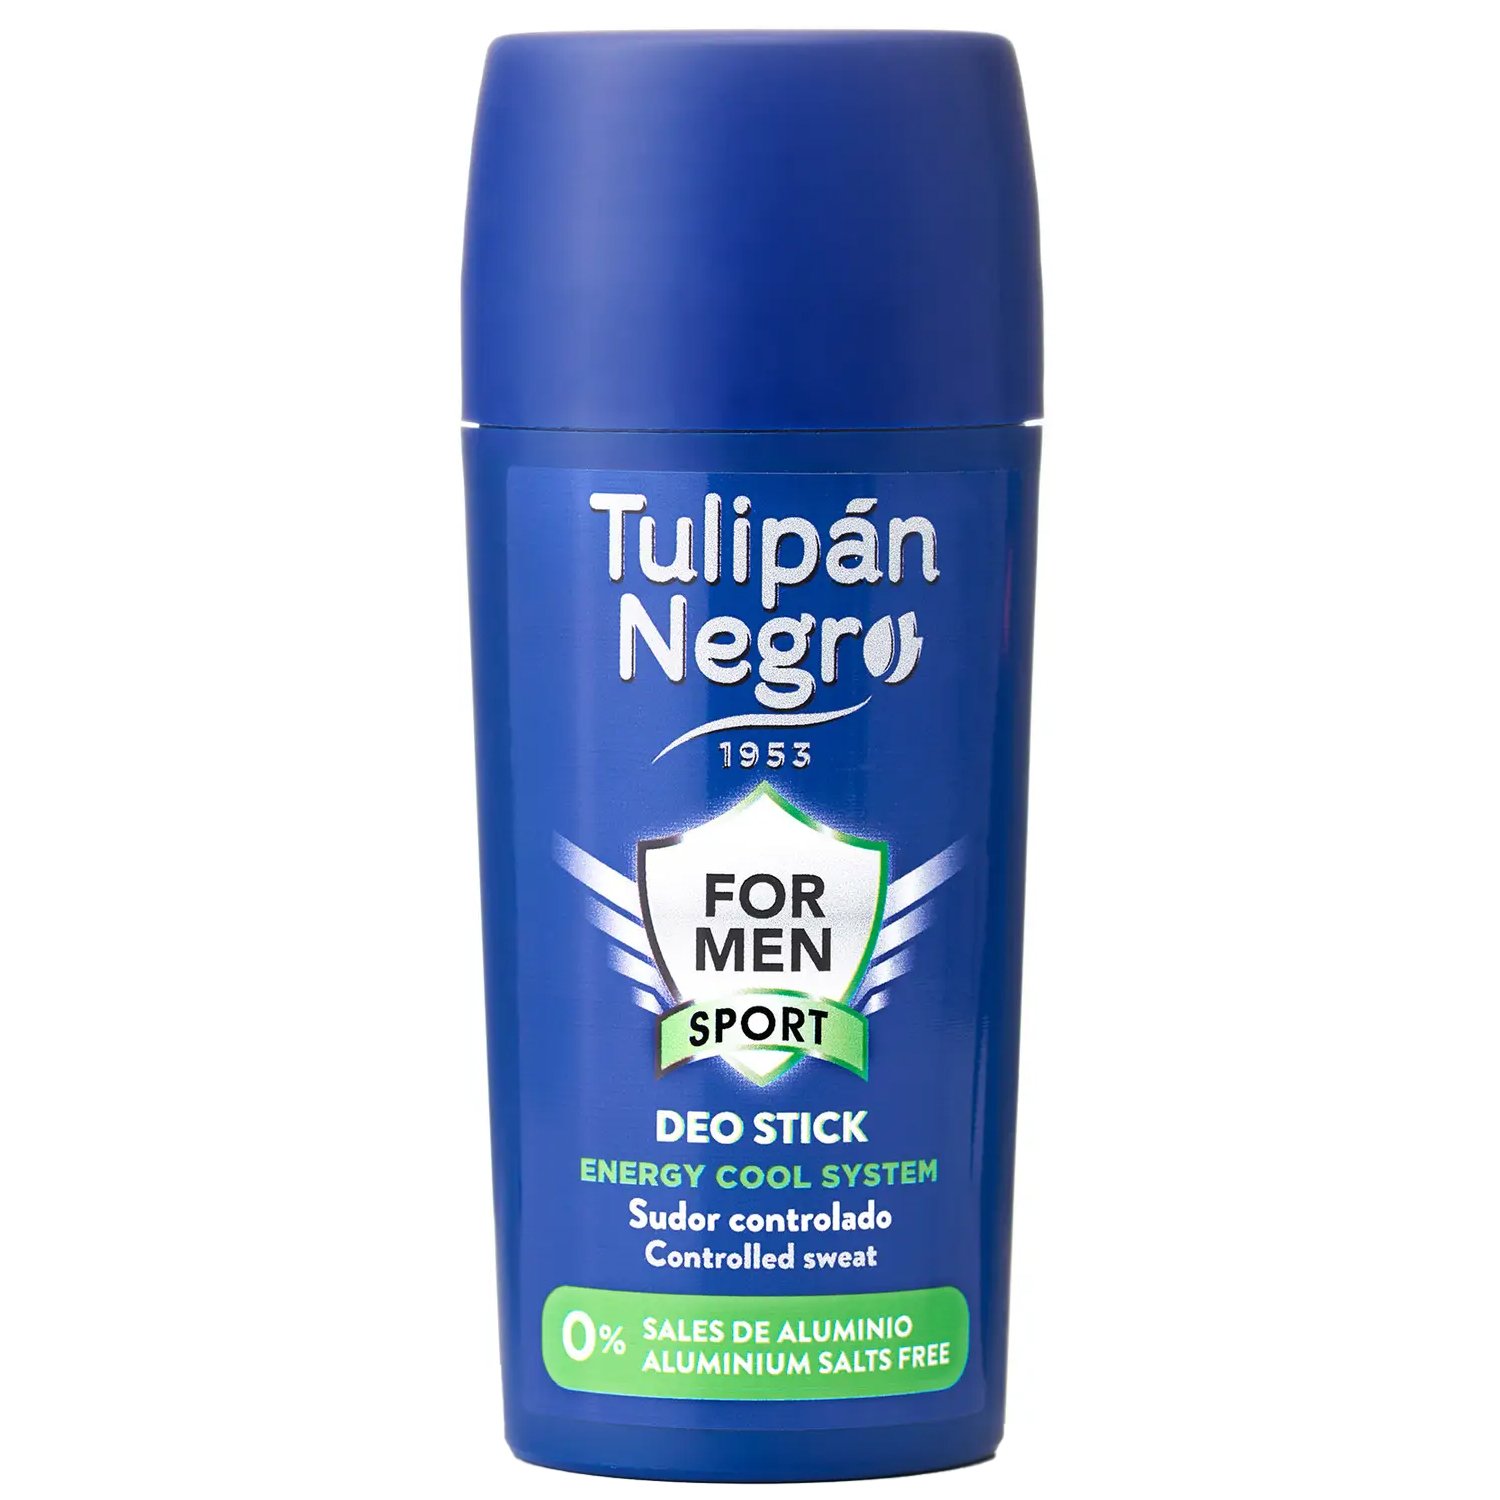 Дезодорант-стик Tulipan Negro For Men Sport, 75 мл - фото 1